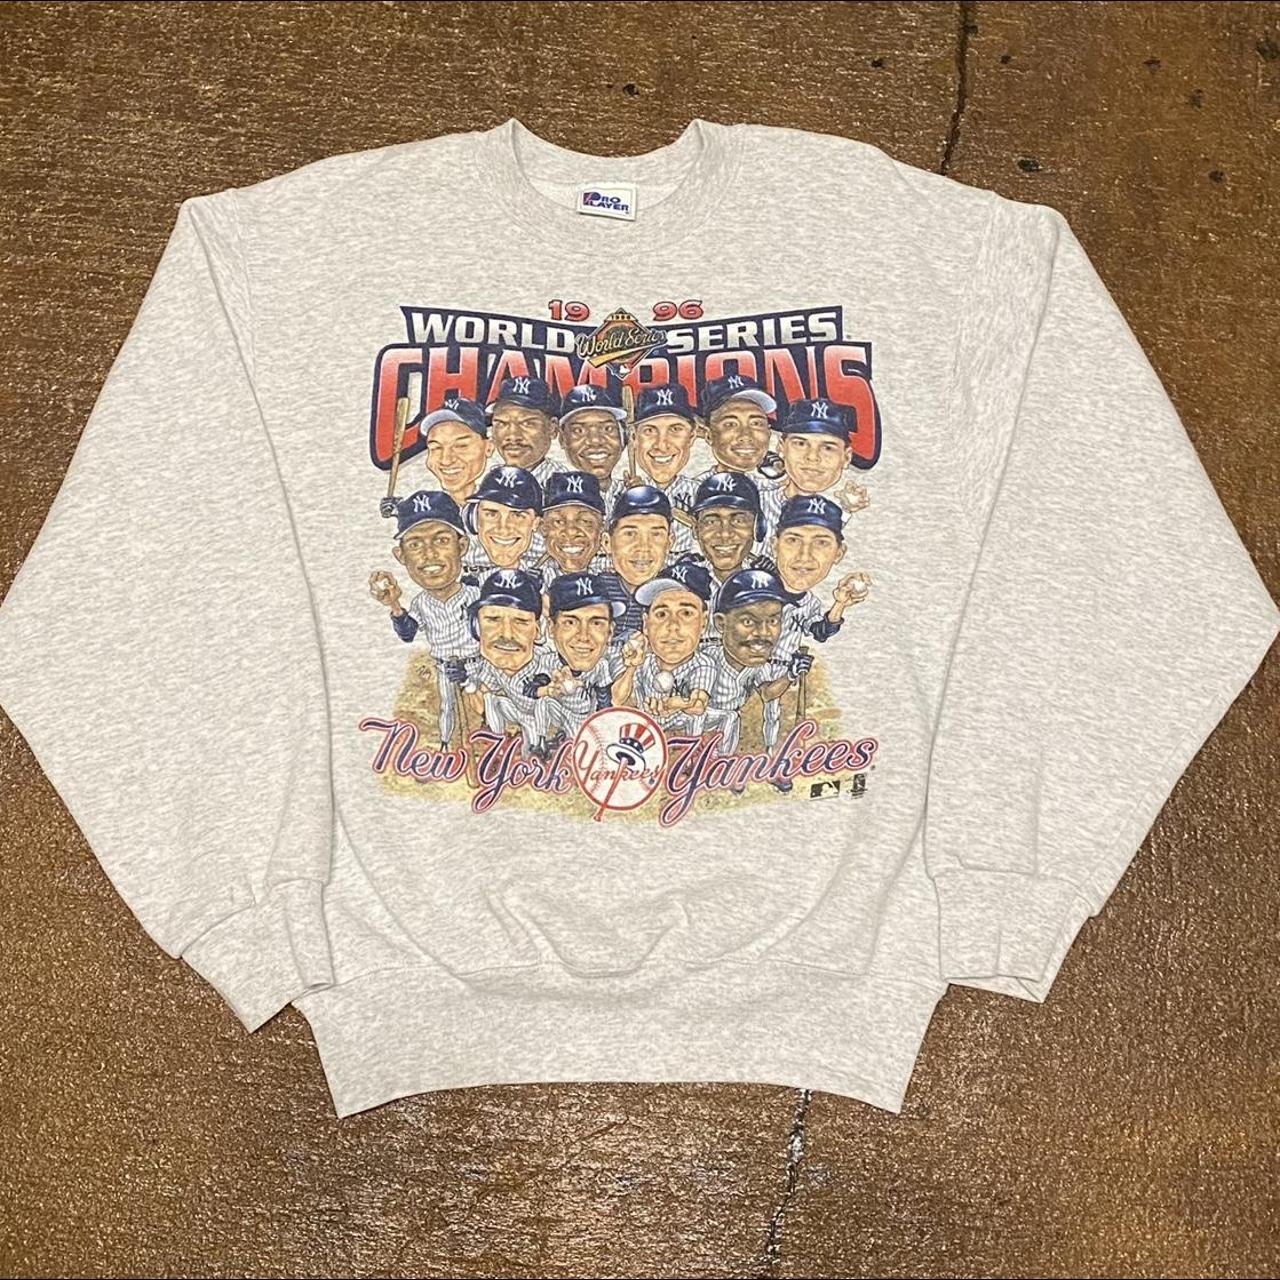 Vintage MLB New York Yankees Sweatshirt 1996 Size Medium Made in USA